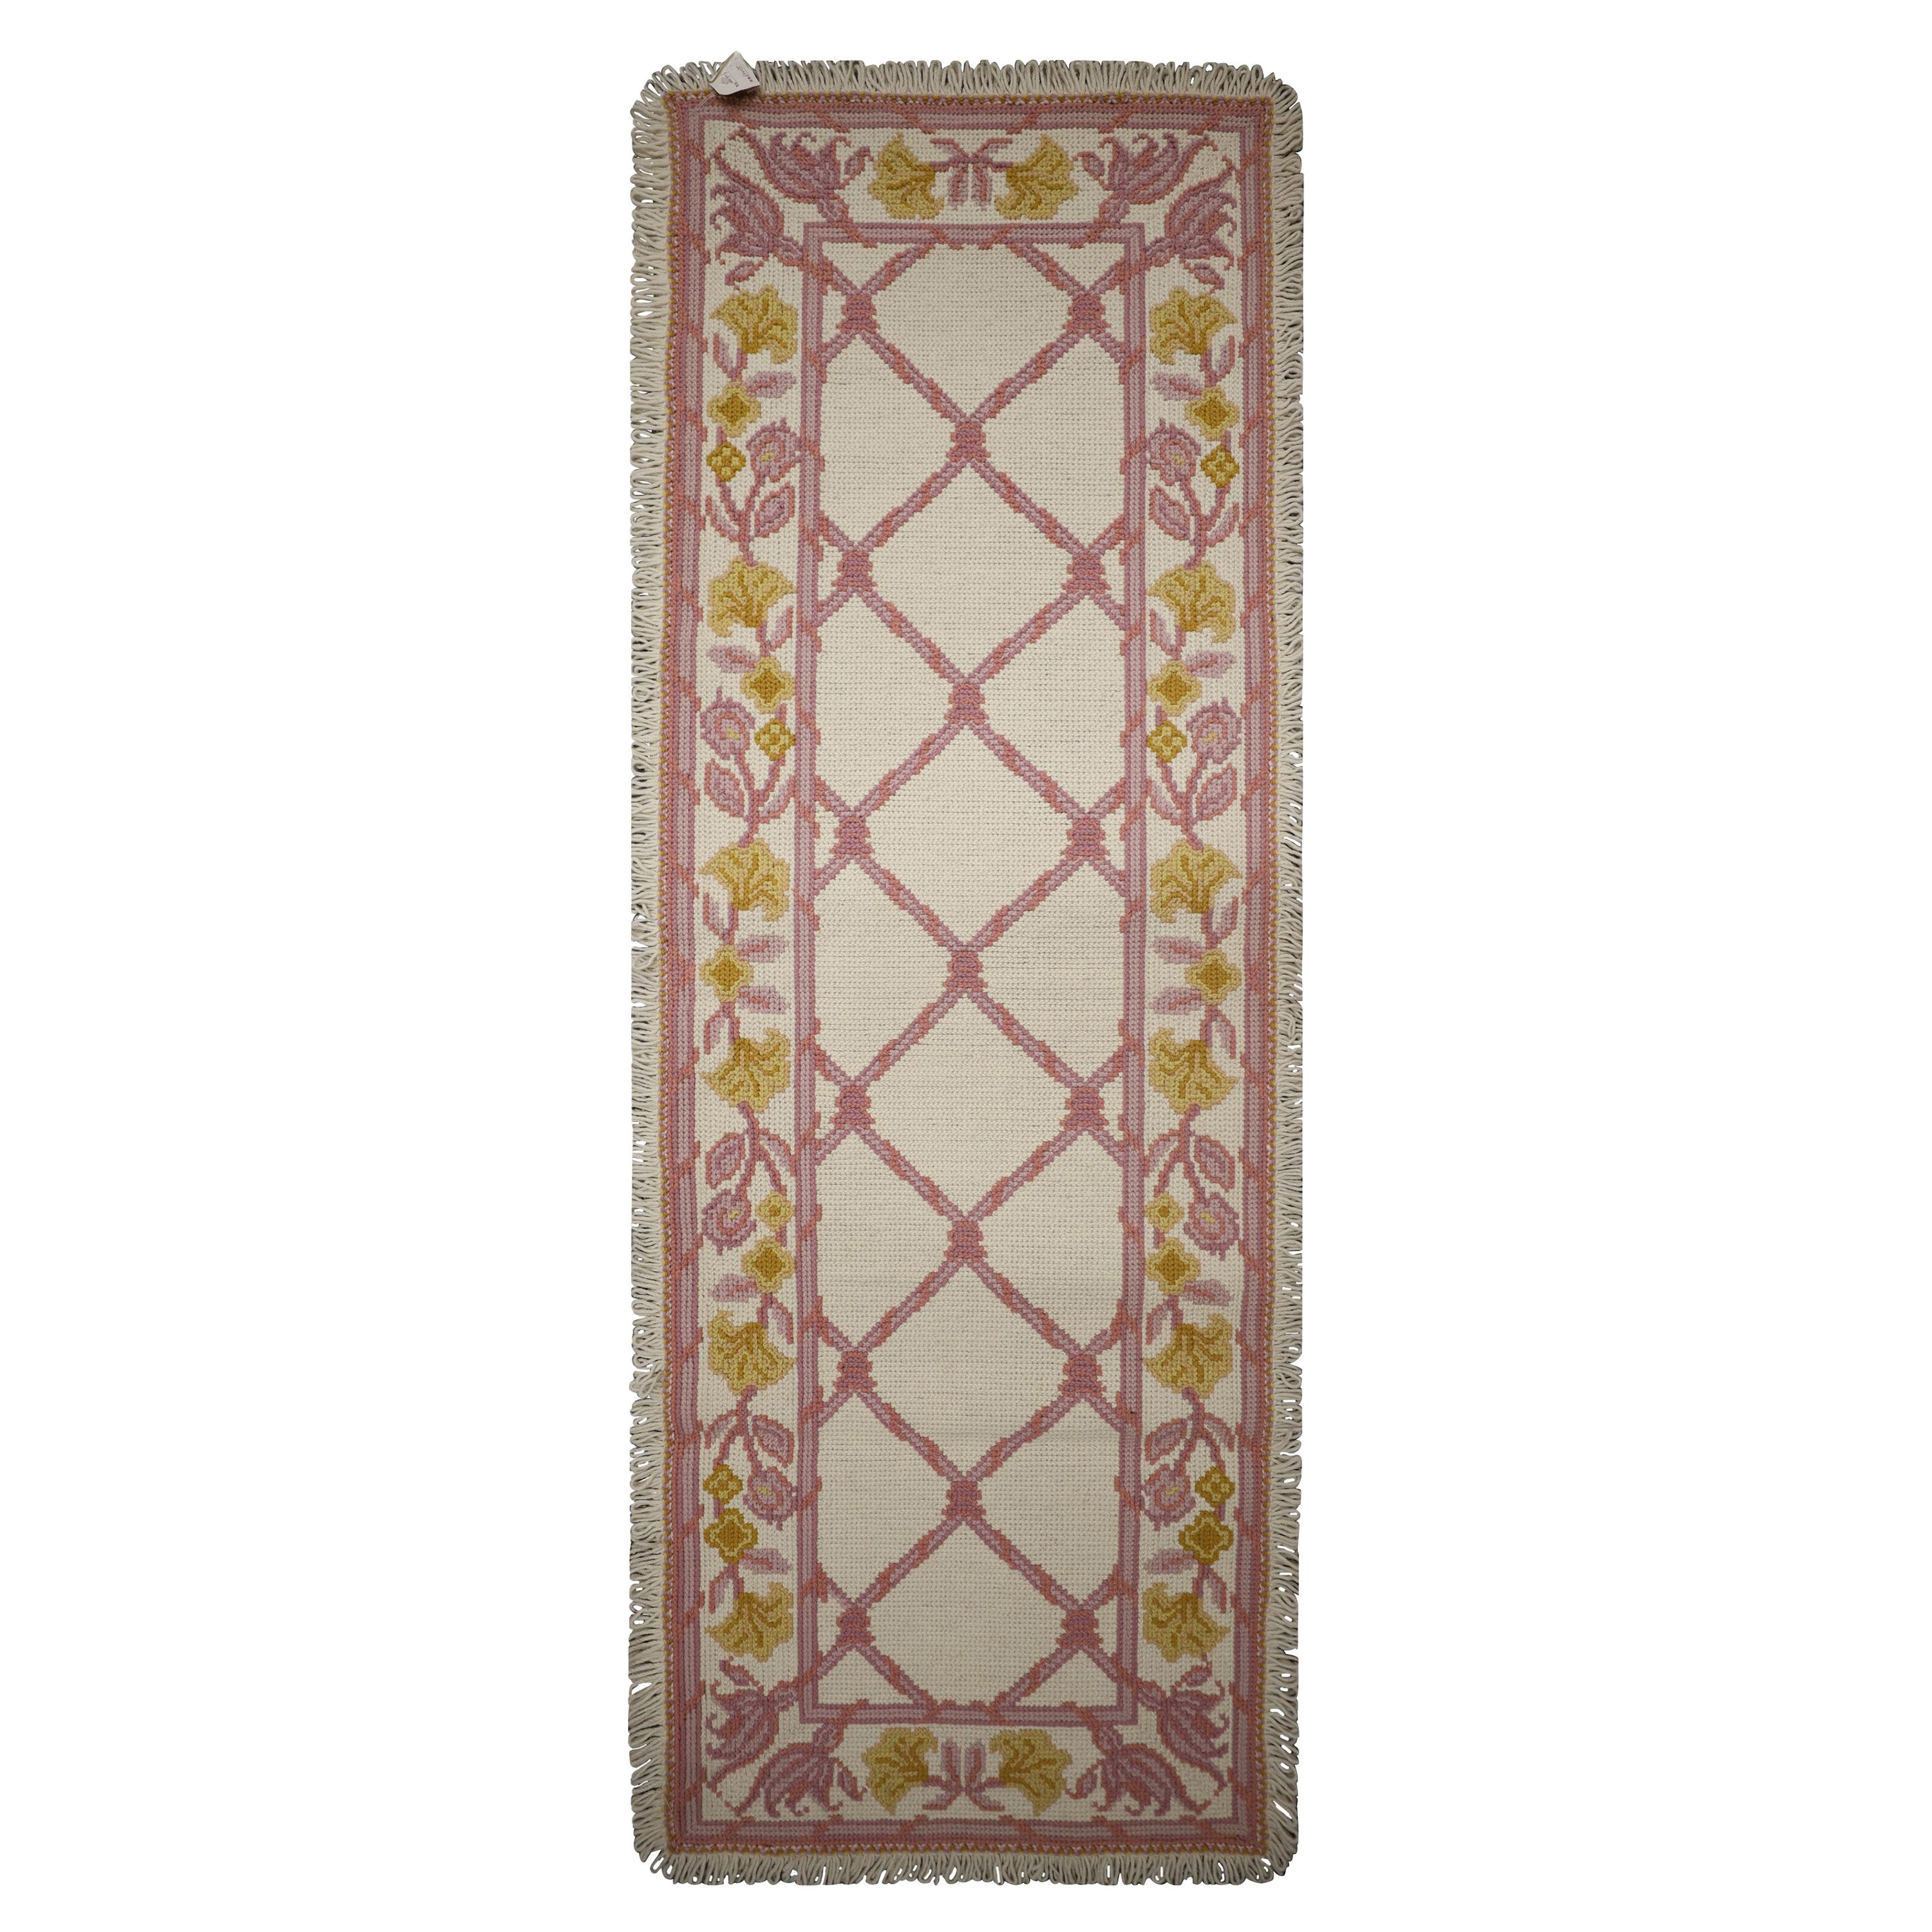 Handwoven Oriental Area Rug, Traditional Needlepoint Carpet Runner